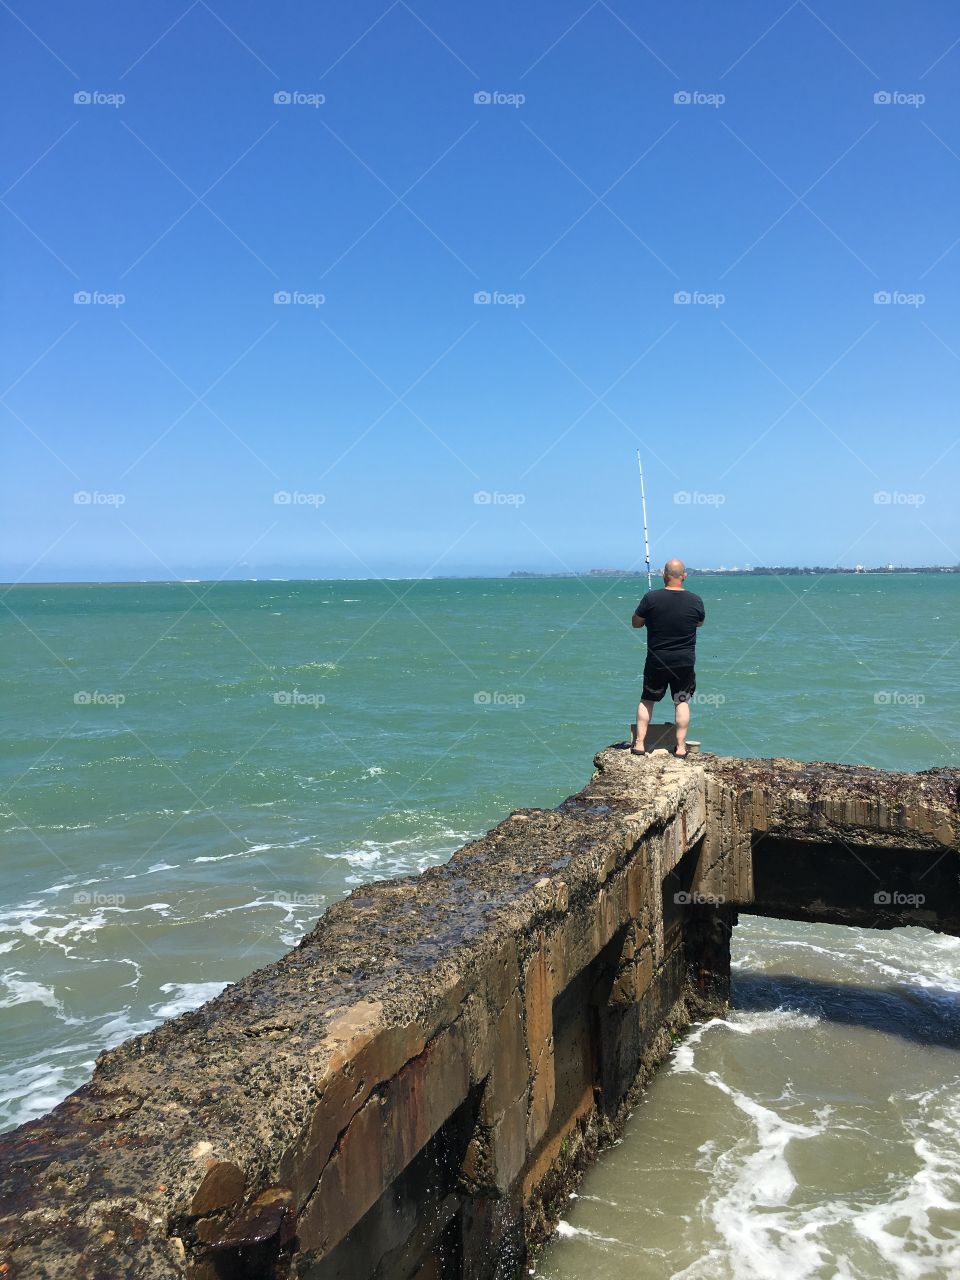 Fishing on the ocean